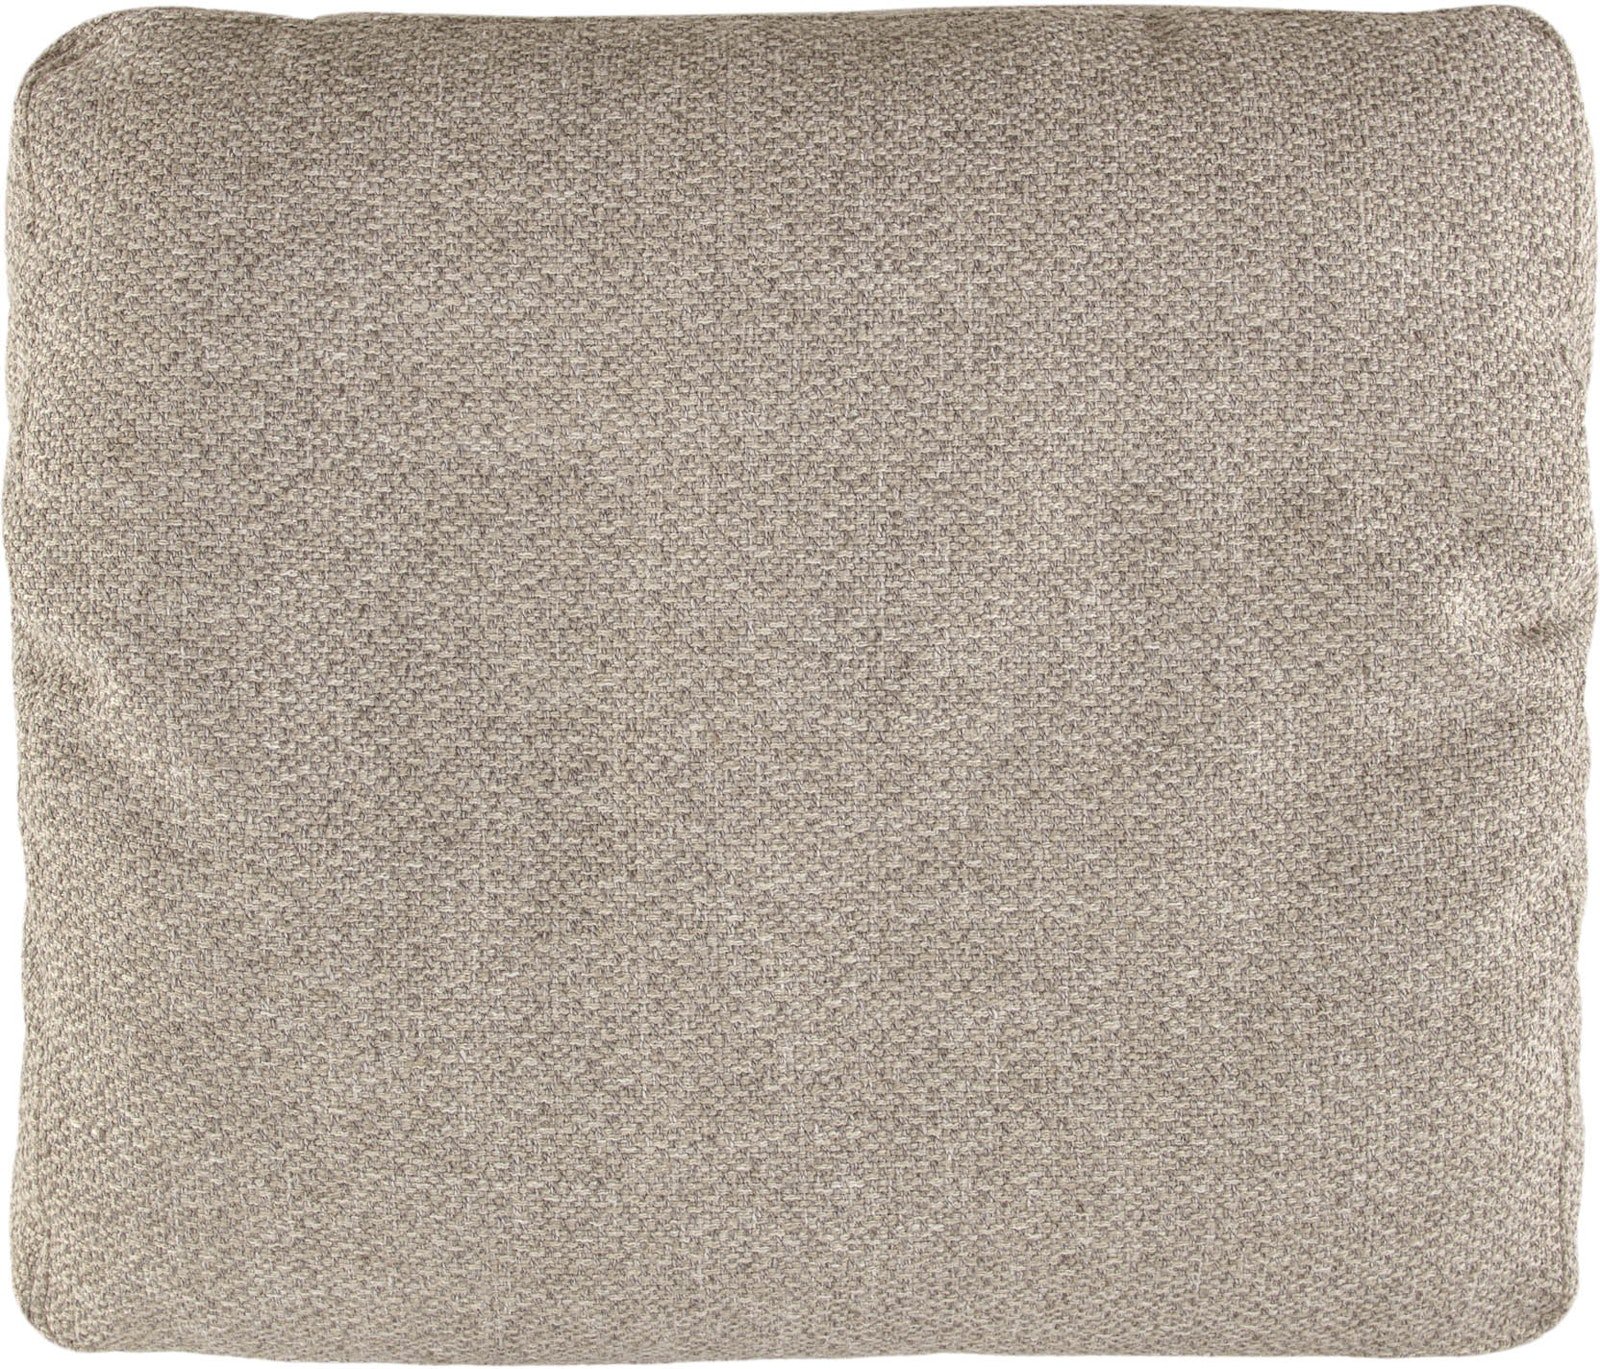 7: Noa, Sofa tilbehør pude, moderne, nordisk, stof by Laforma (H: 14 cm. x B: 30 cm. x L: 65 cm., Beige)